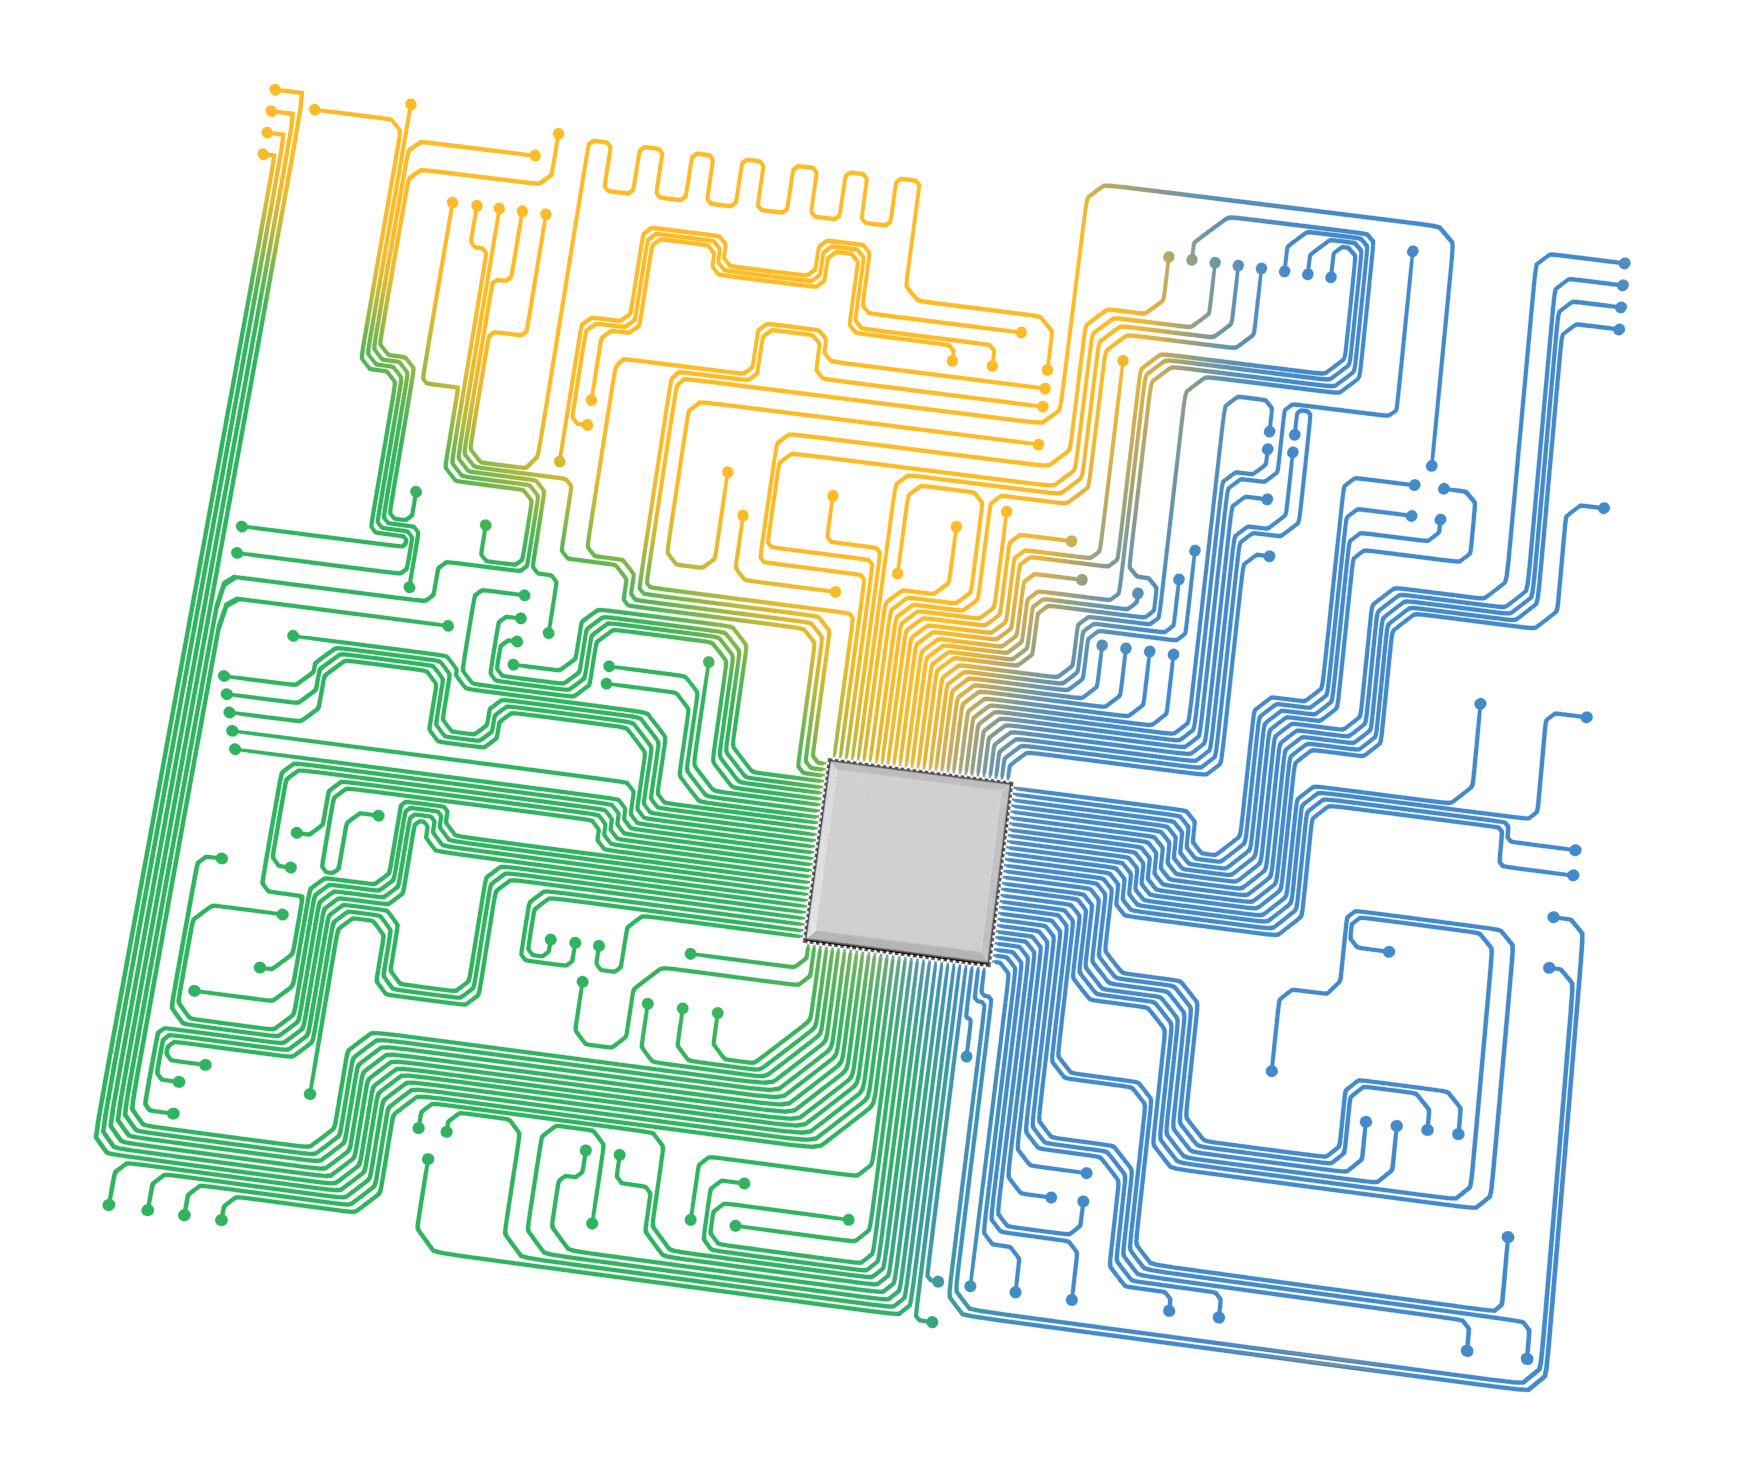 Computer circuit board coloured in Google colours